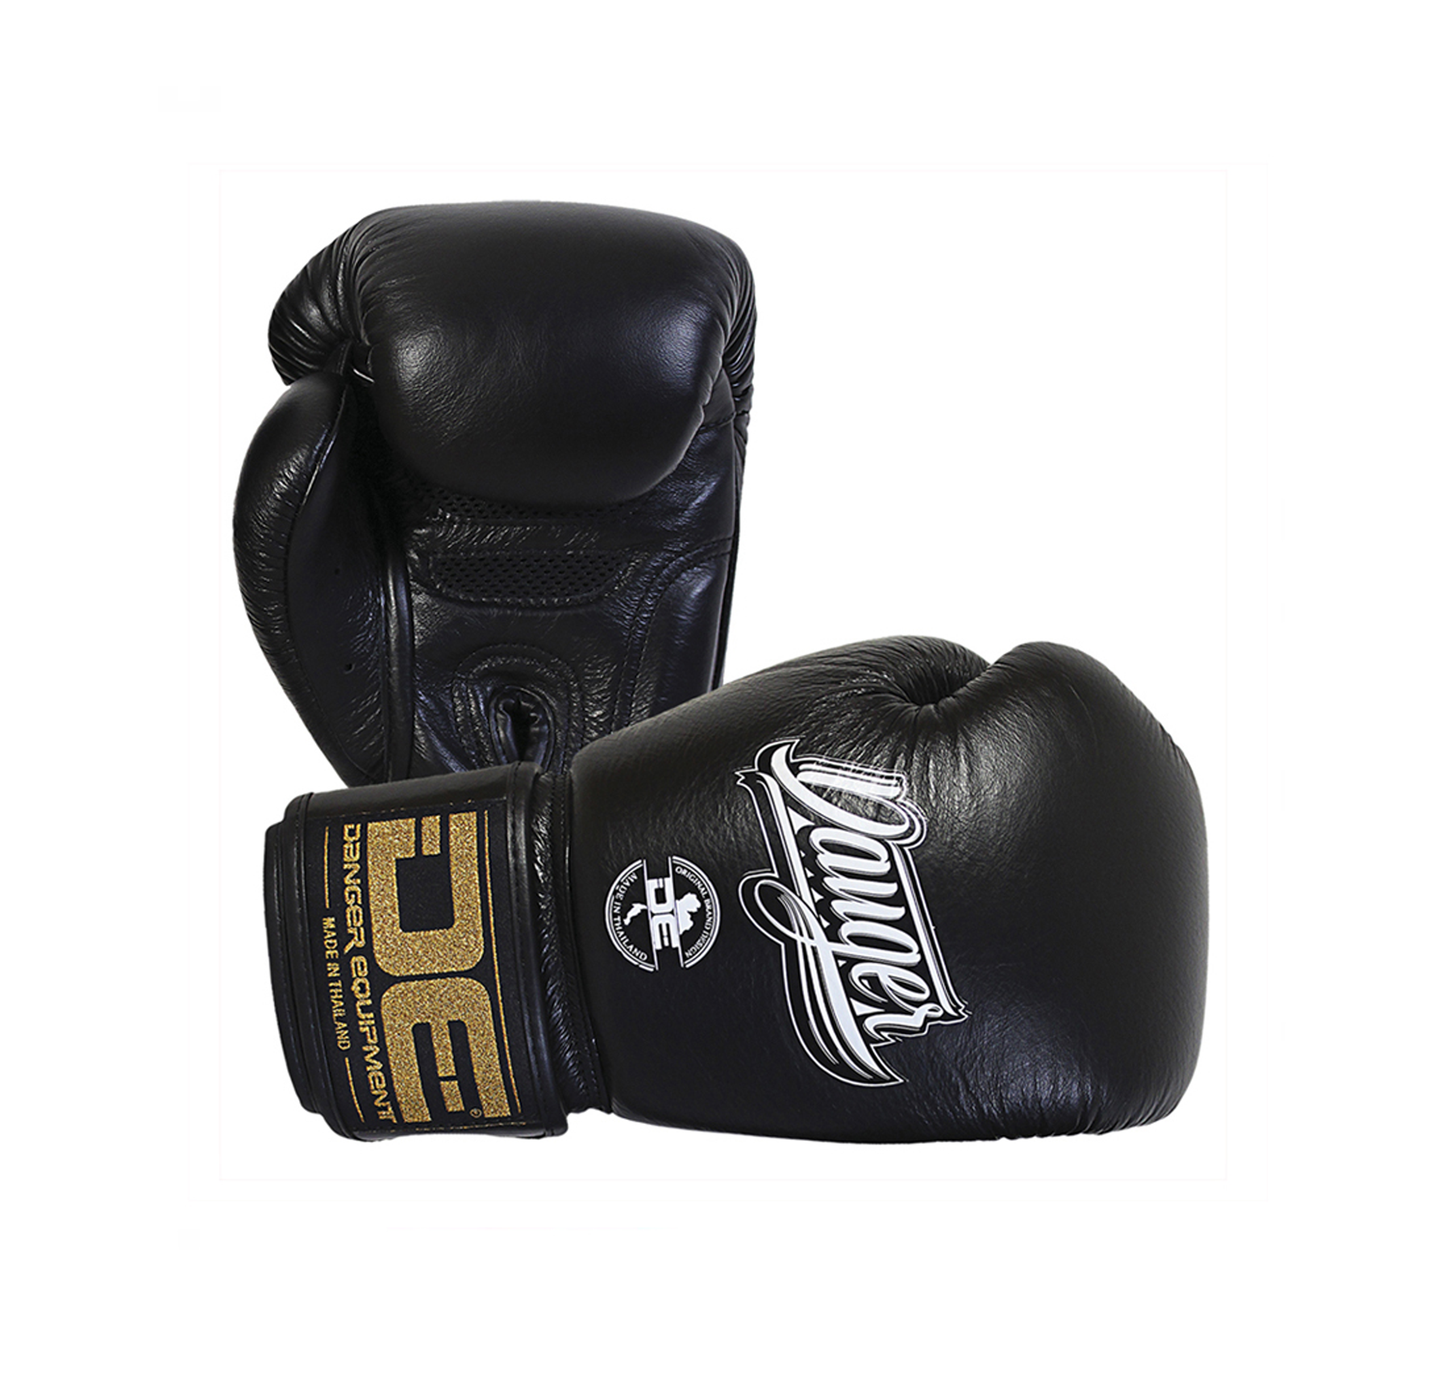 DANGER Boxing Gloves Supermax 2.0 Black